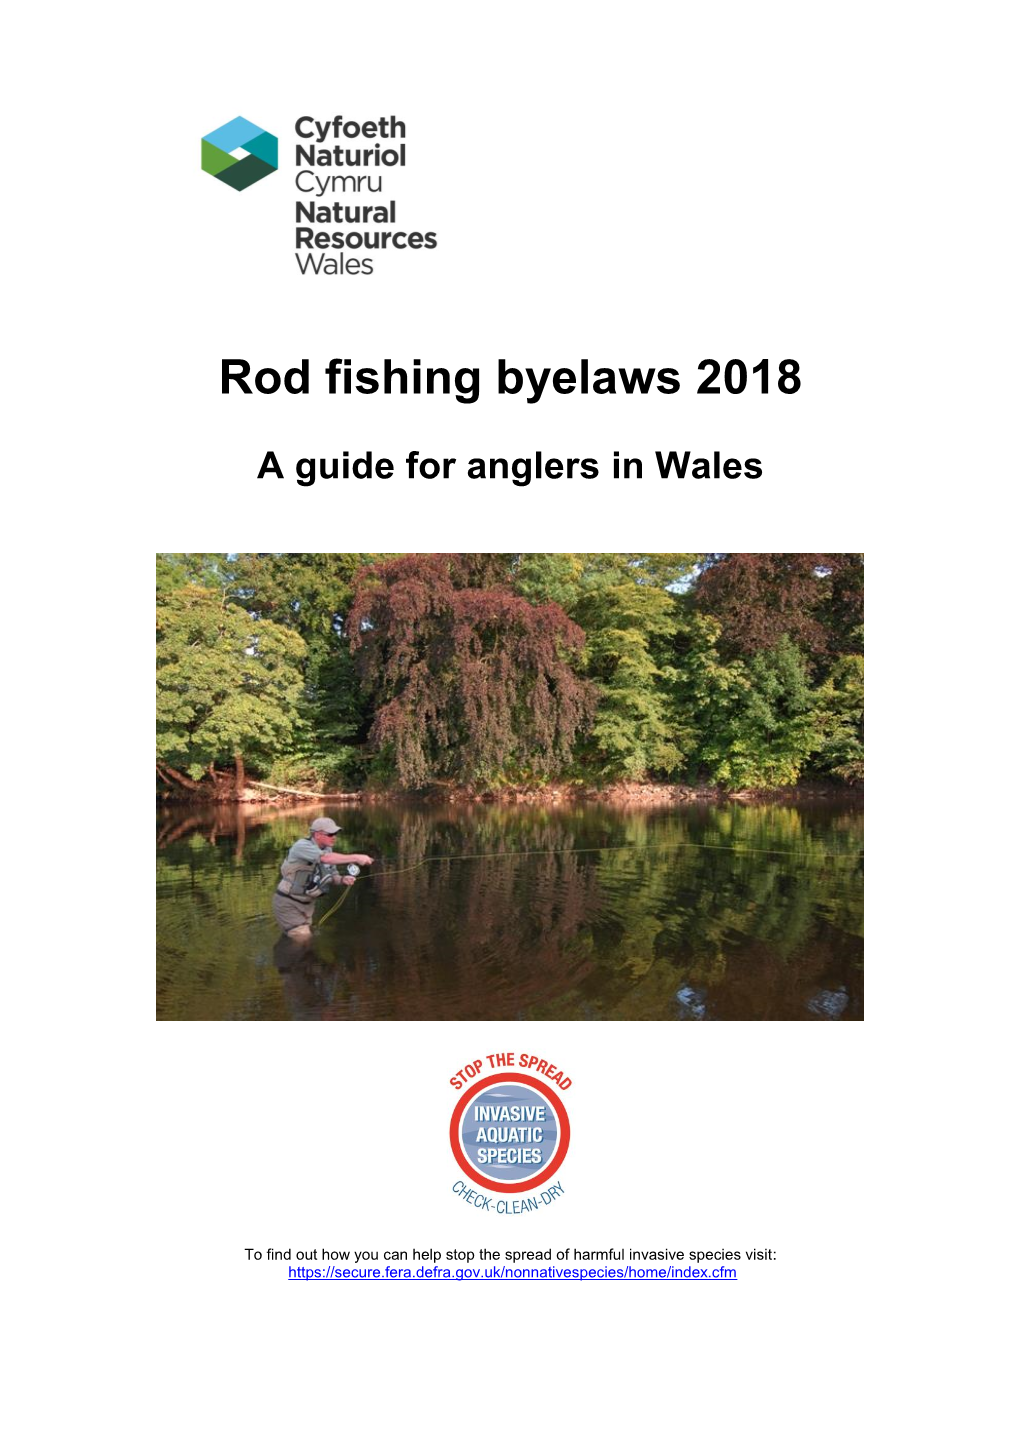 Rod Fishing Byelaws 2018